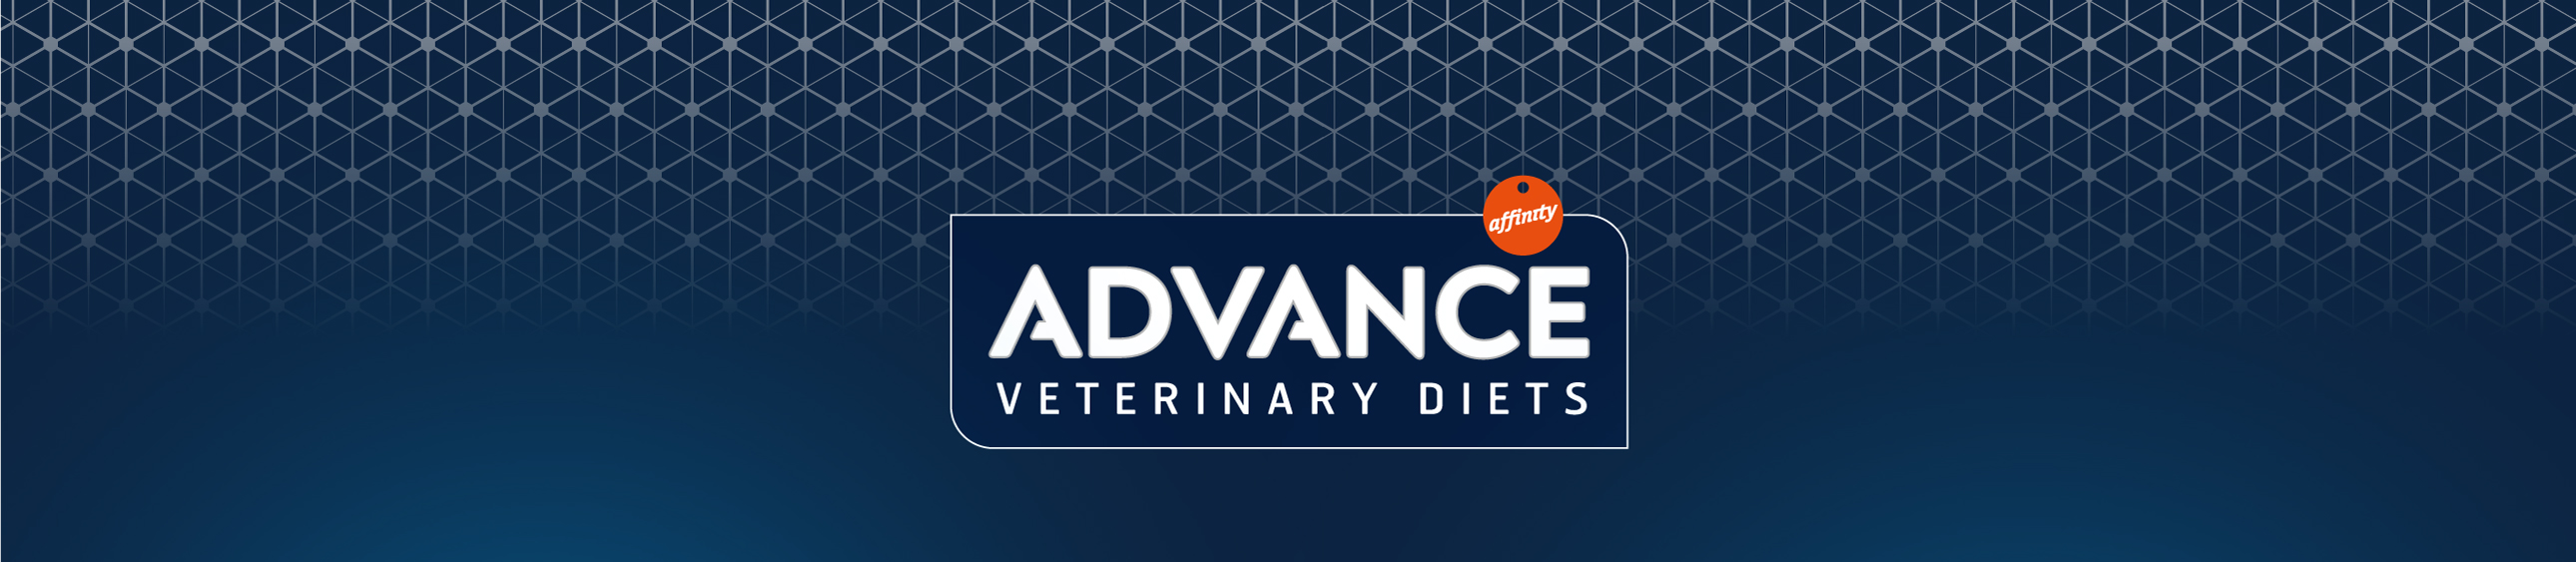 Advance veterinary diets